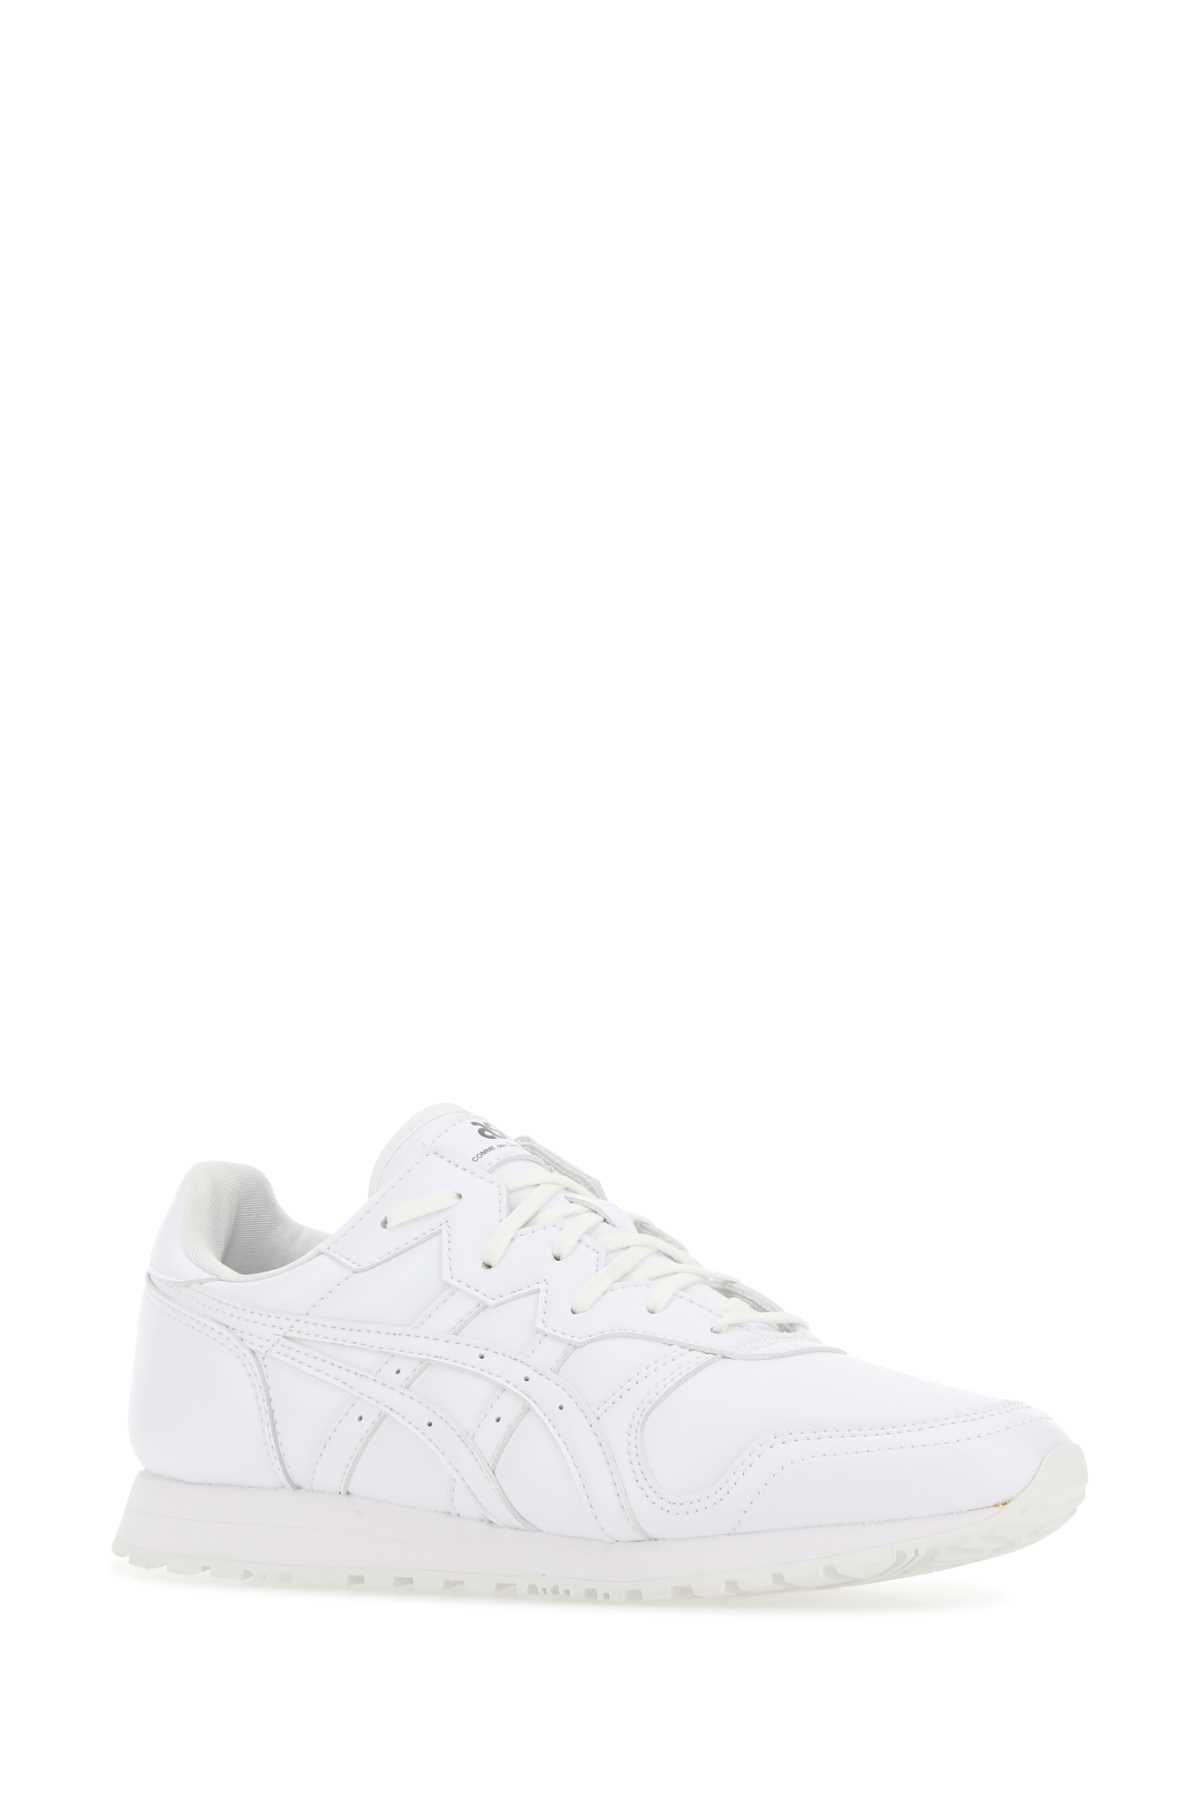 Comme Des Garçons Shirt White Synthetic Leather Oc Runner Sneakers